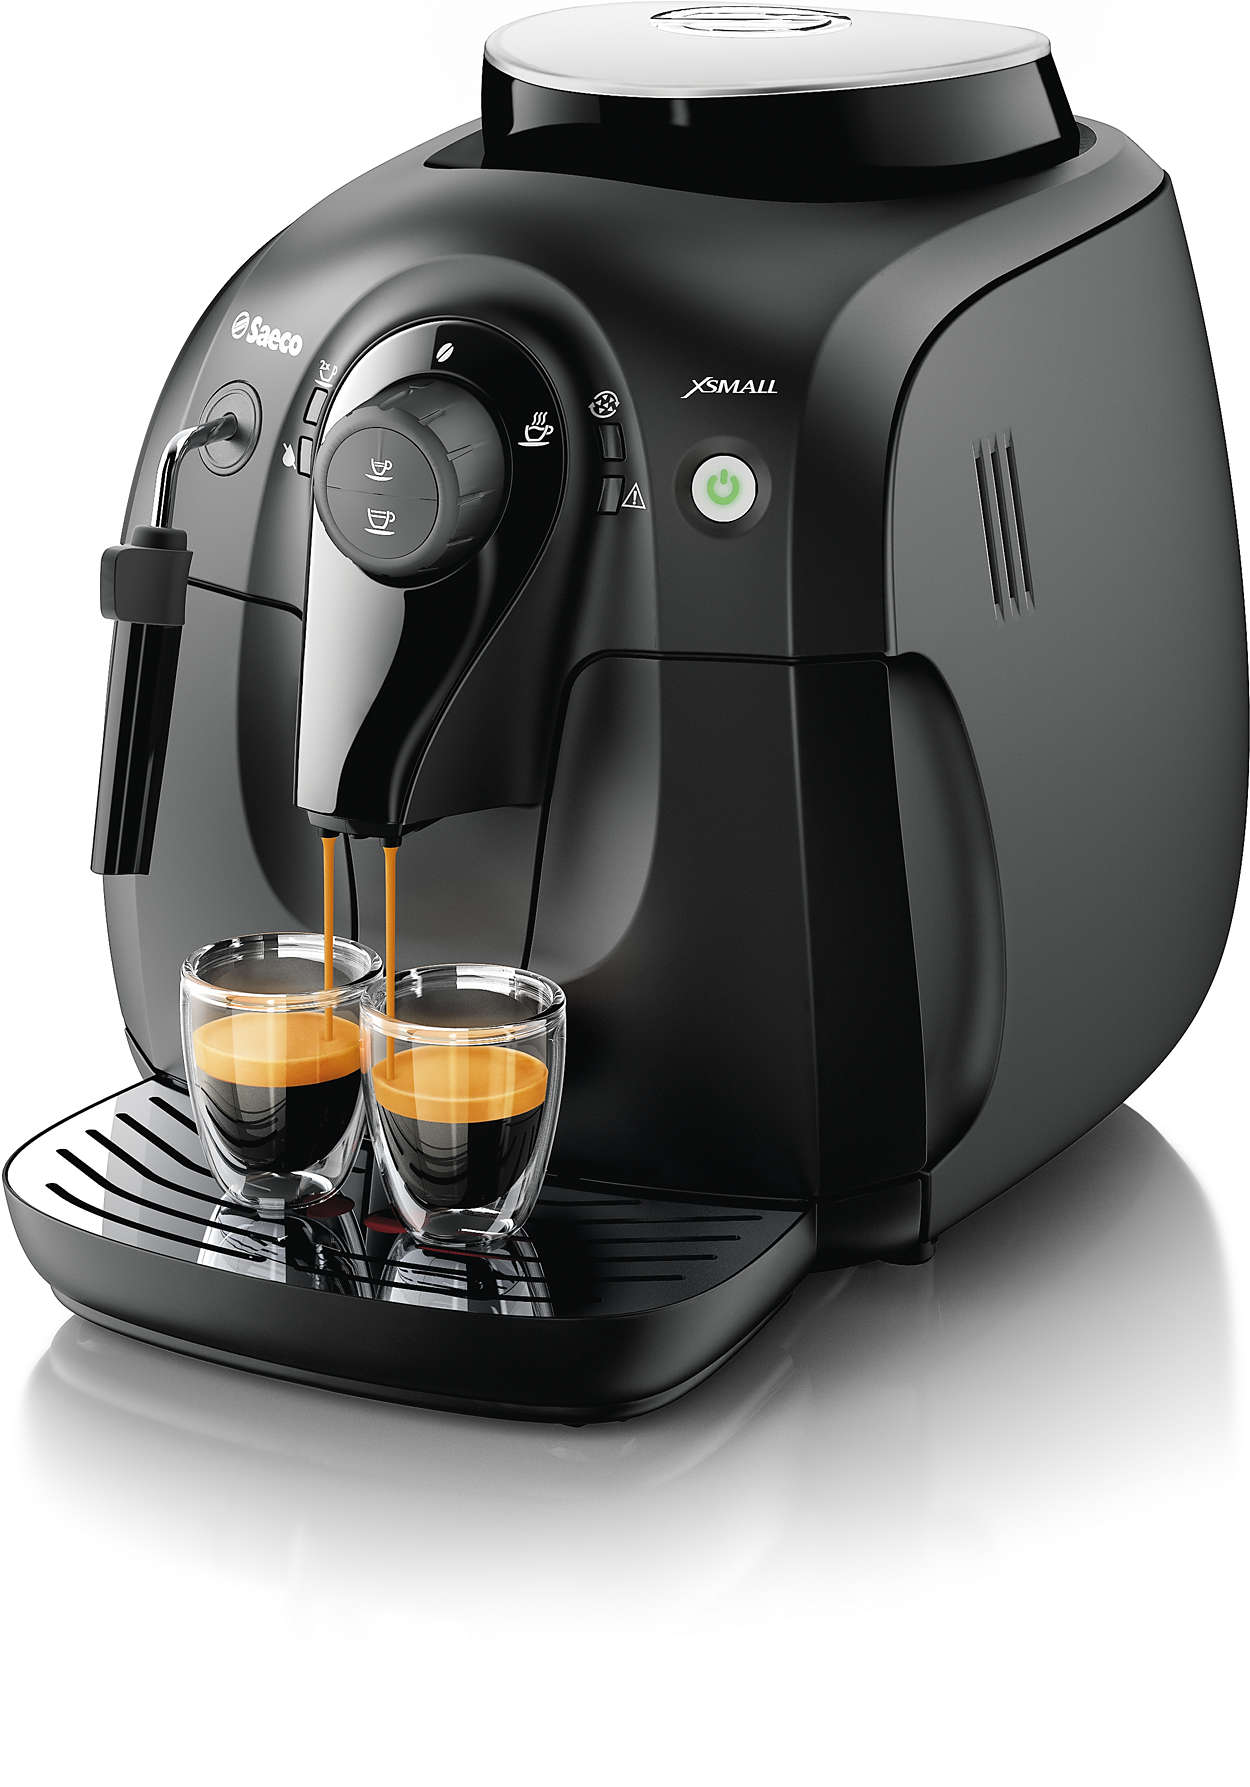 Saeco HD8645/47 Vapore Automatic Espresso Machine One-Touch Coffee Maker X-Small 